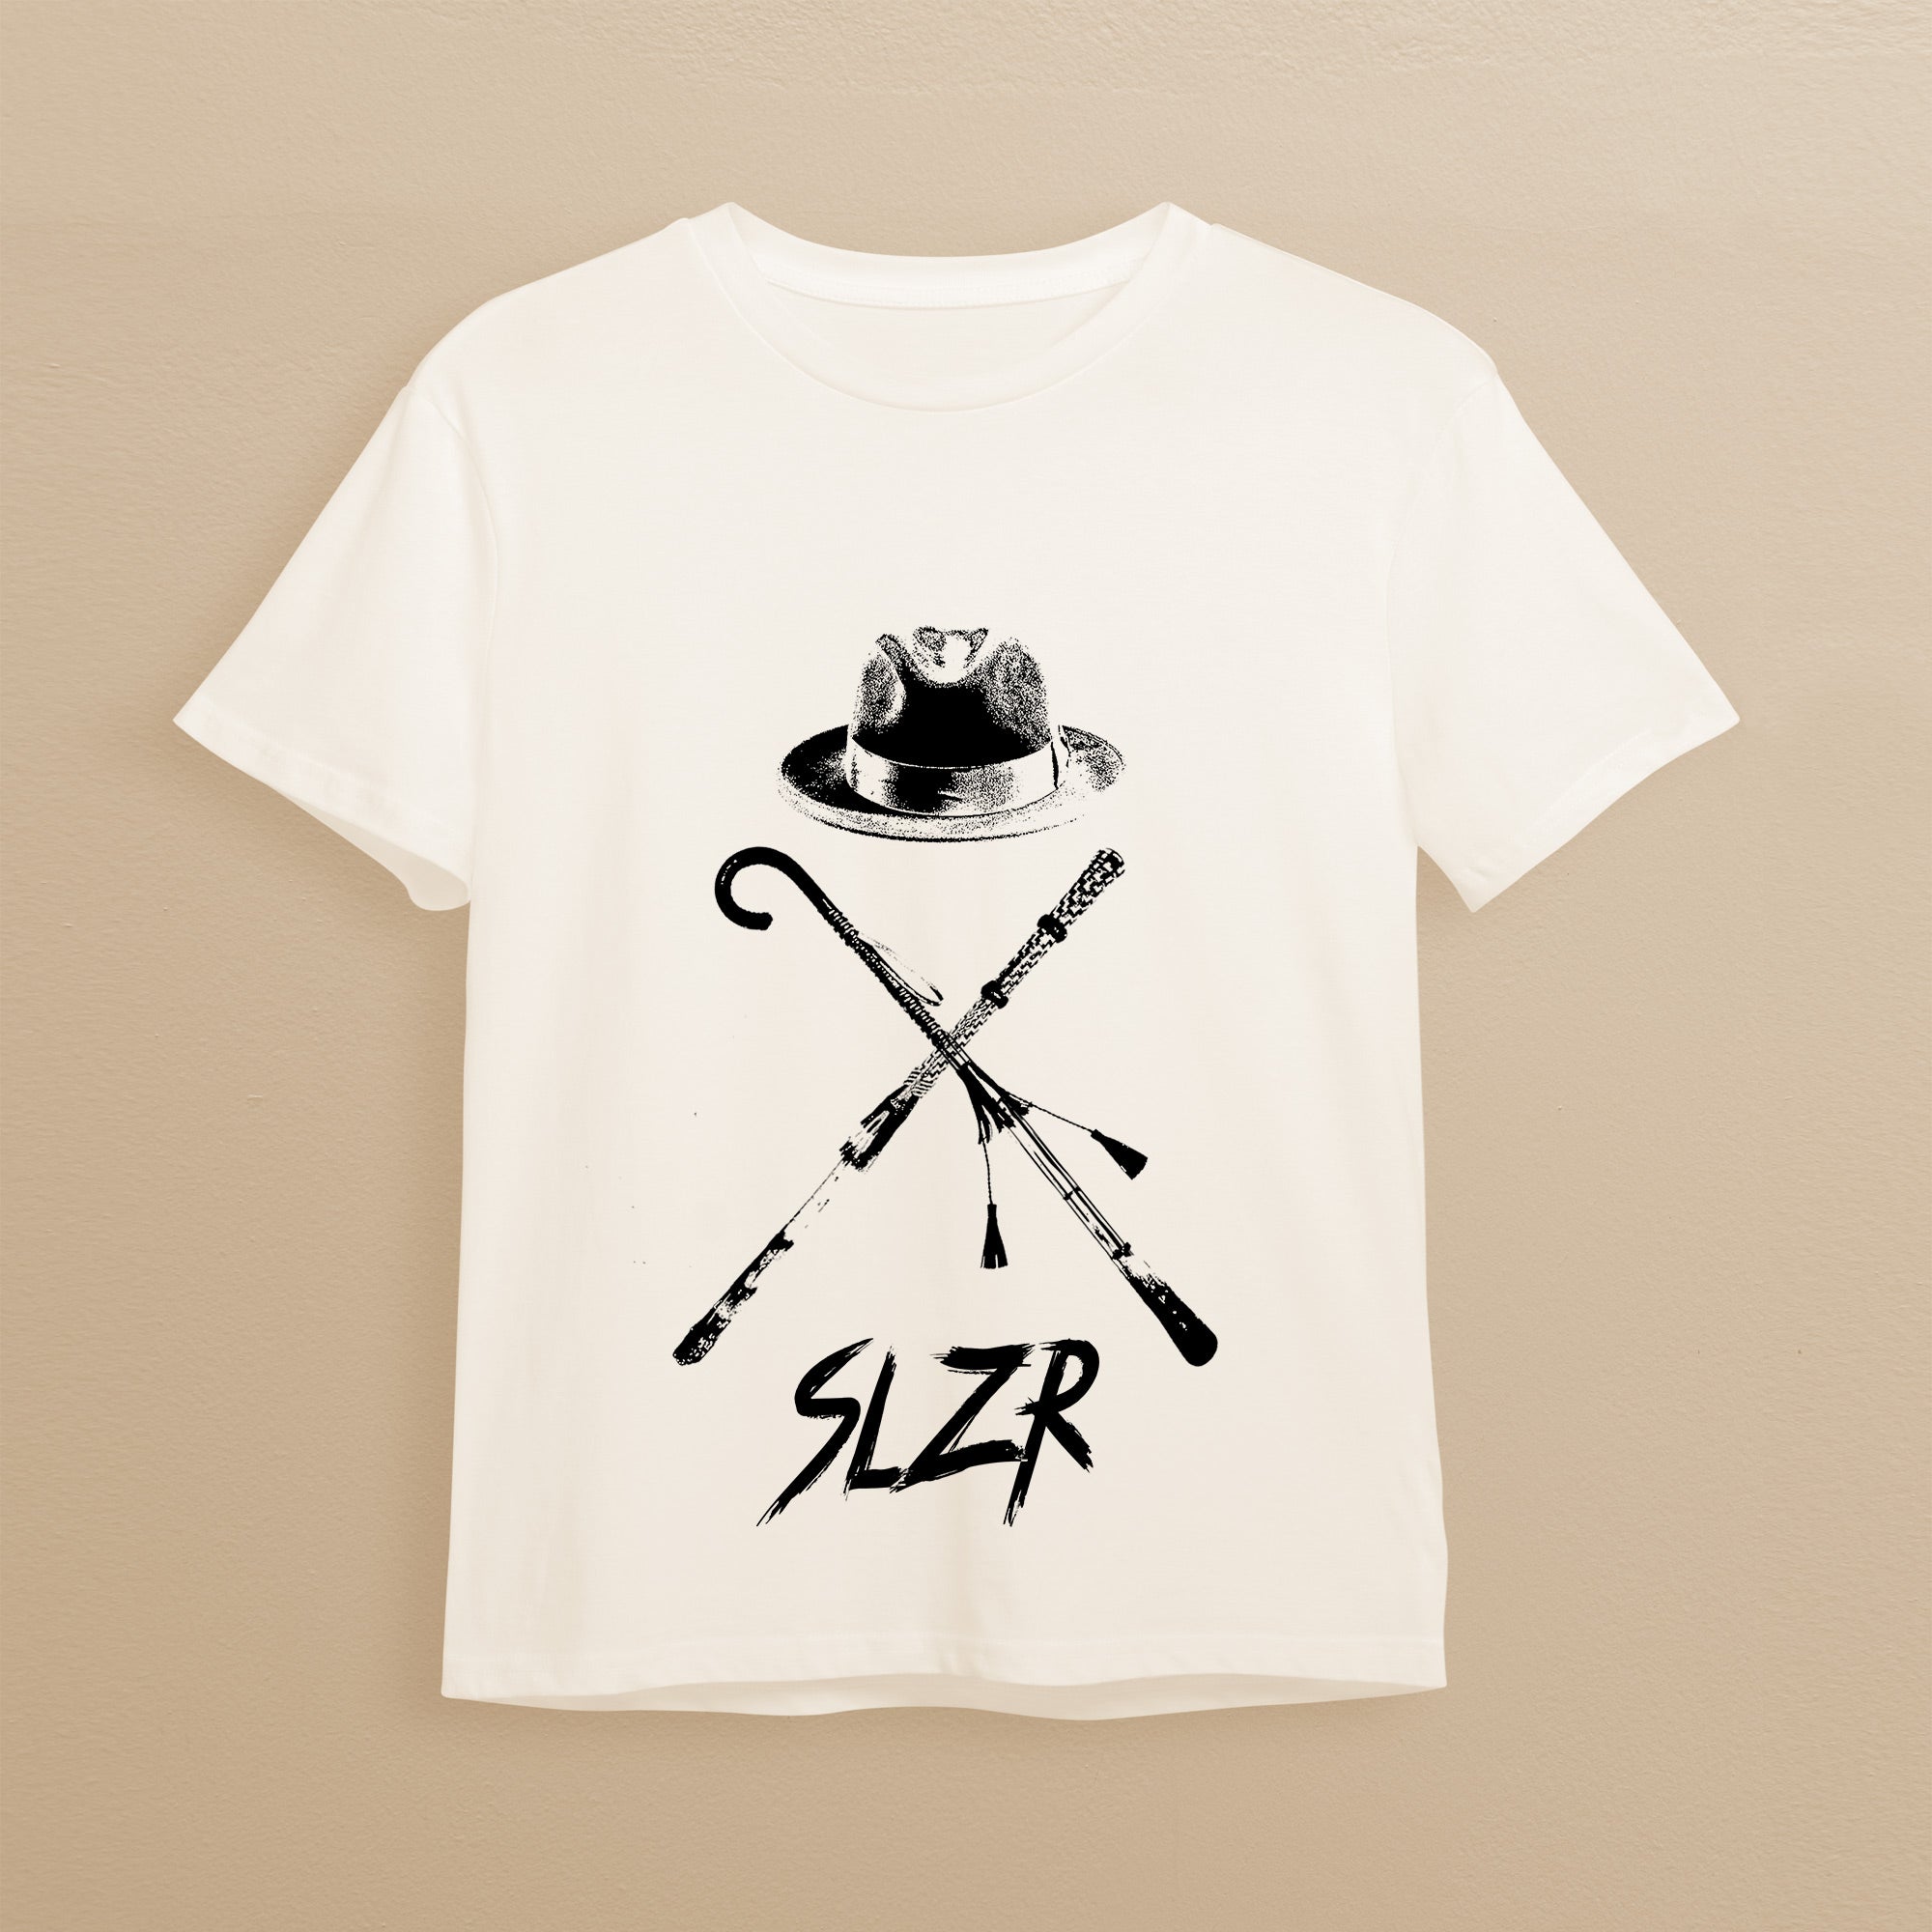 Samuel SLZR - camiseta blanca